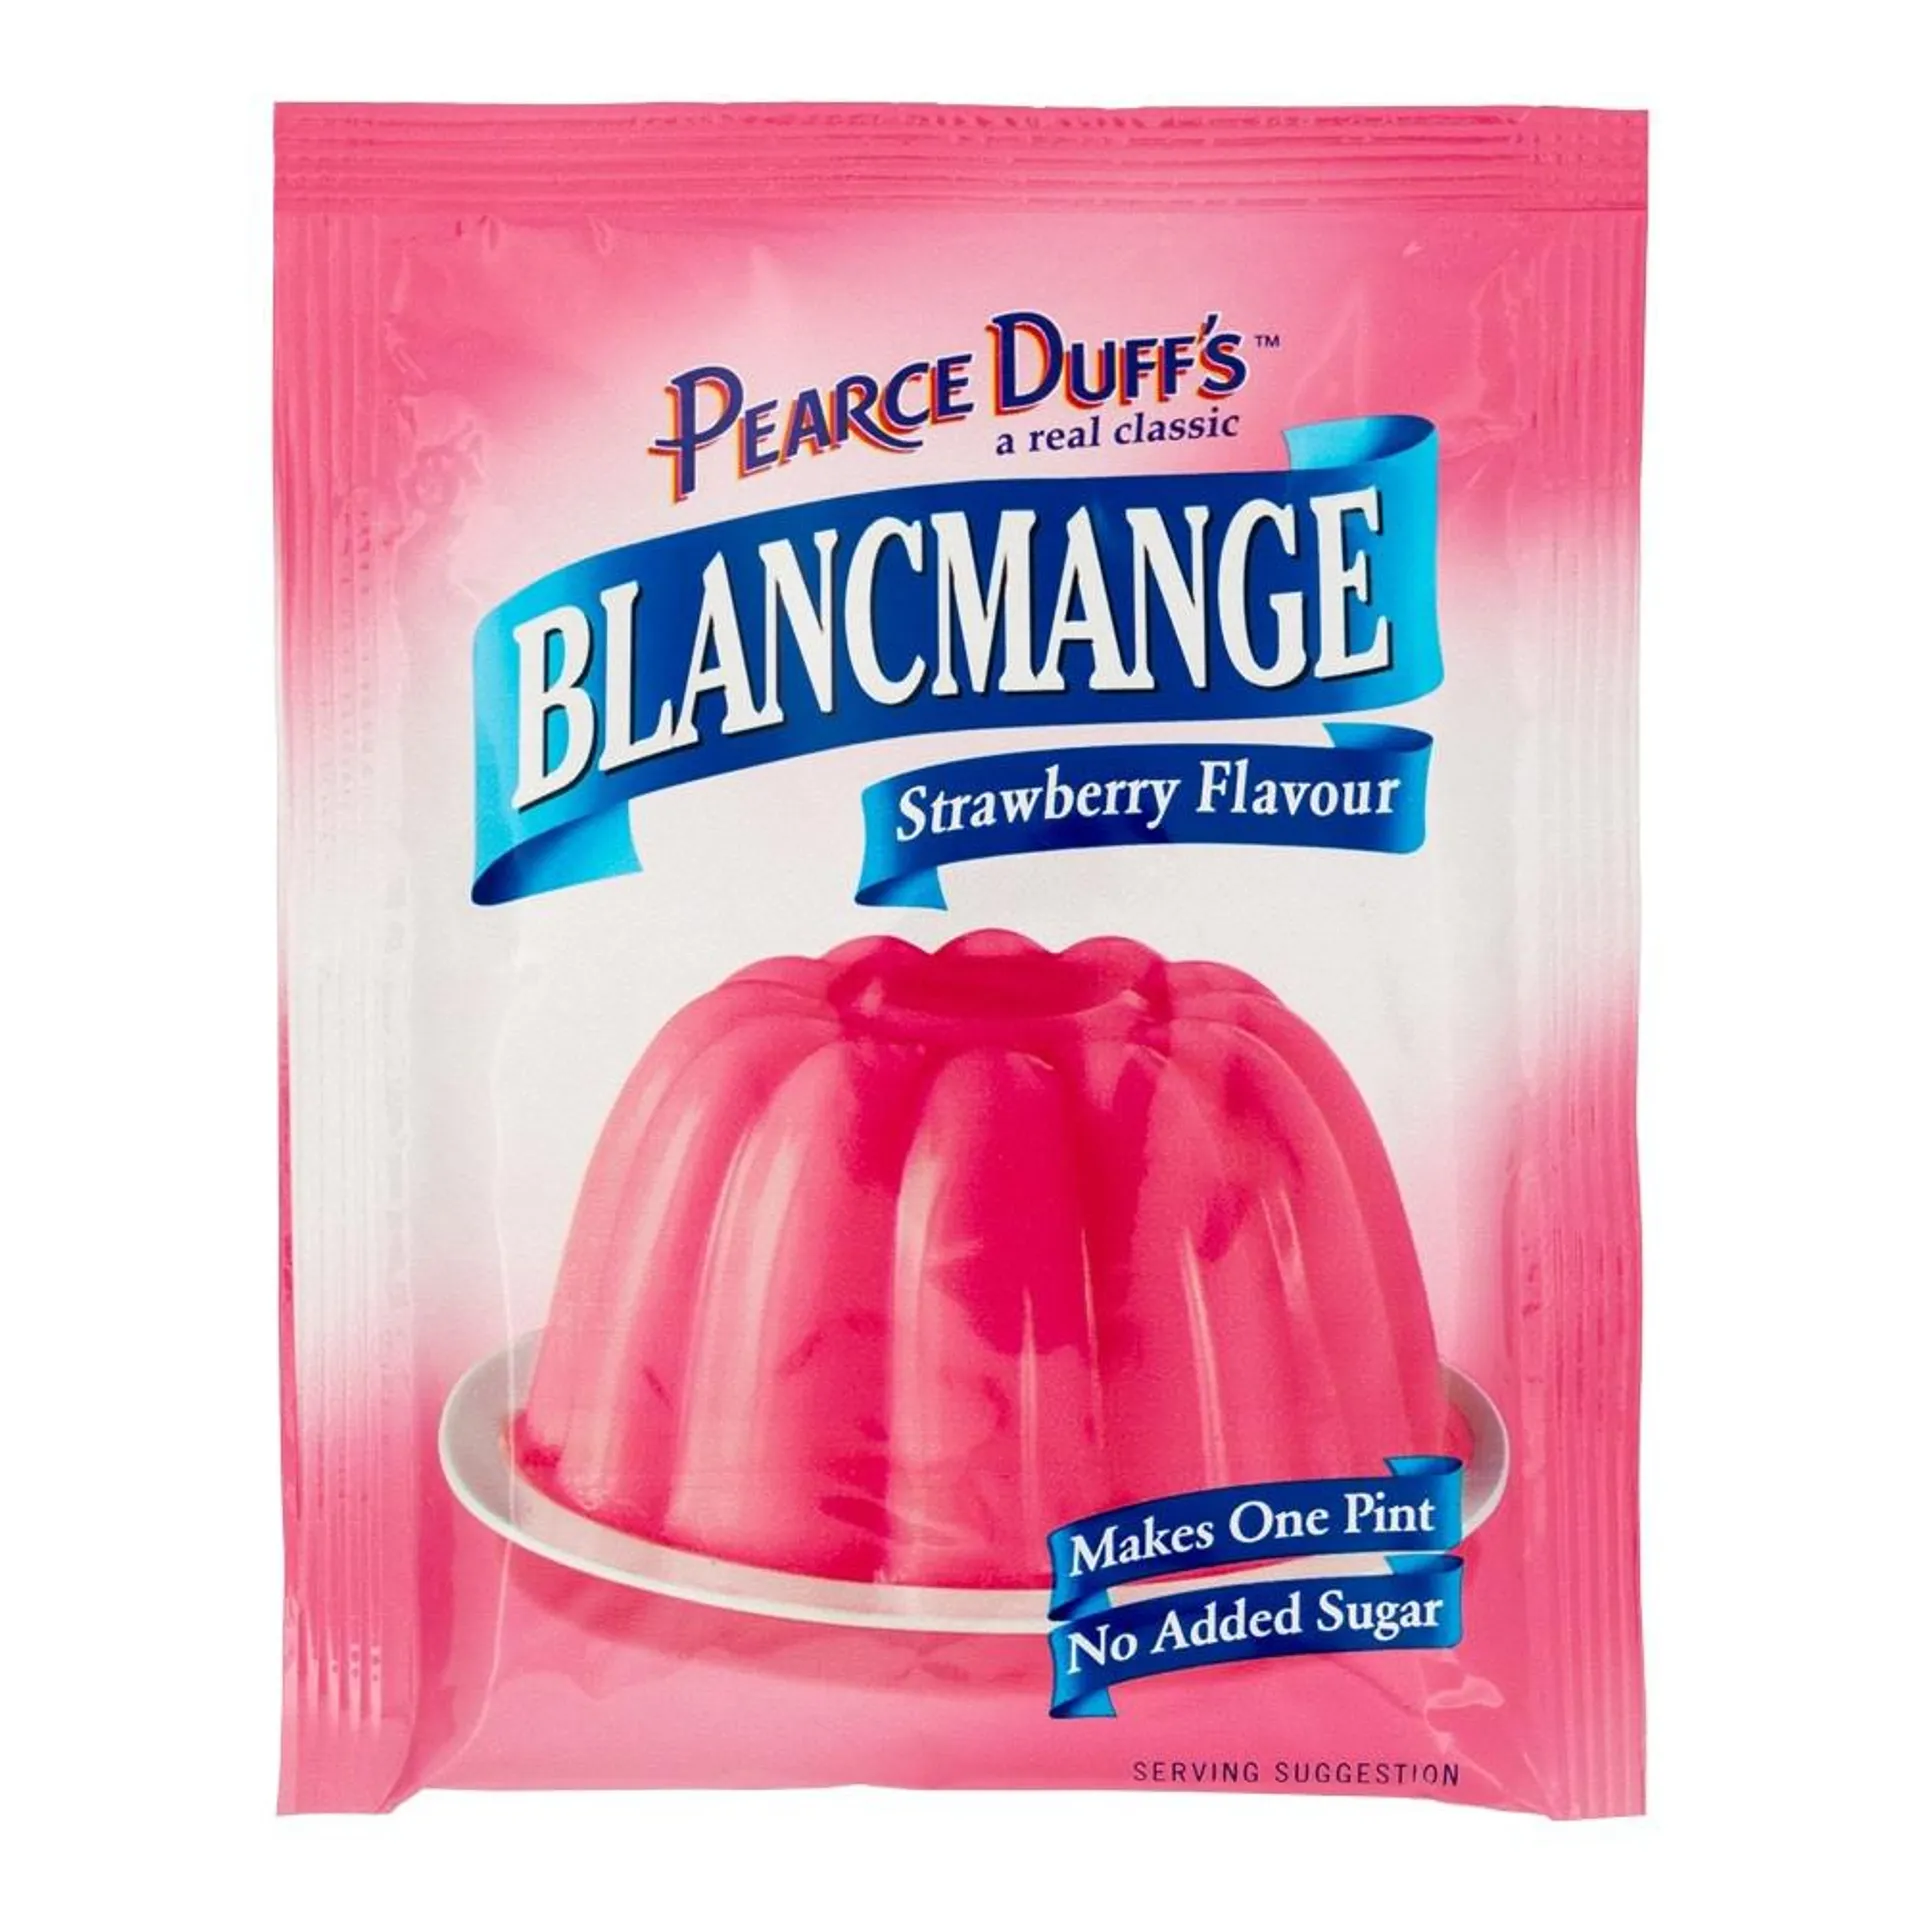 PEARCE DUFF'S BLANCMANGE - STRAWBERRY FLAVOUR 35g